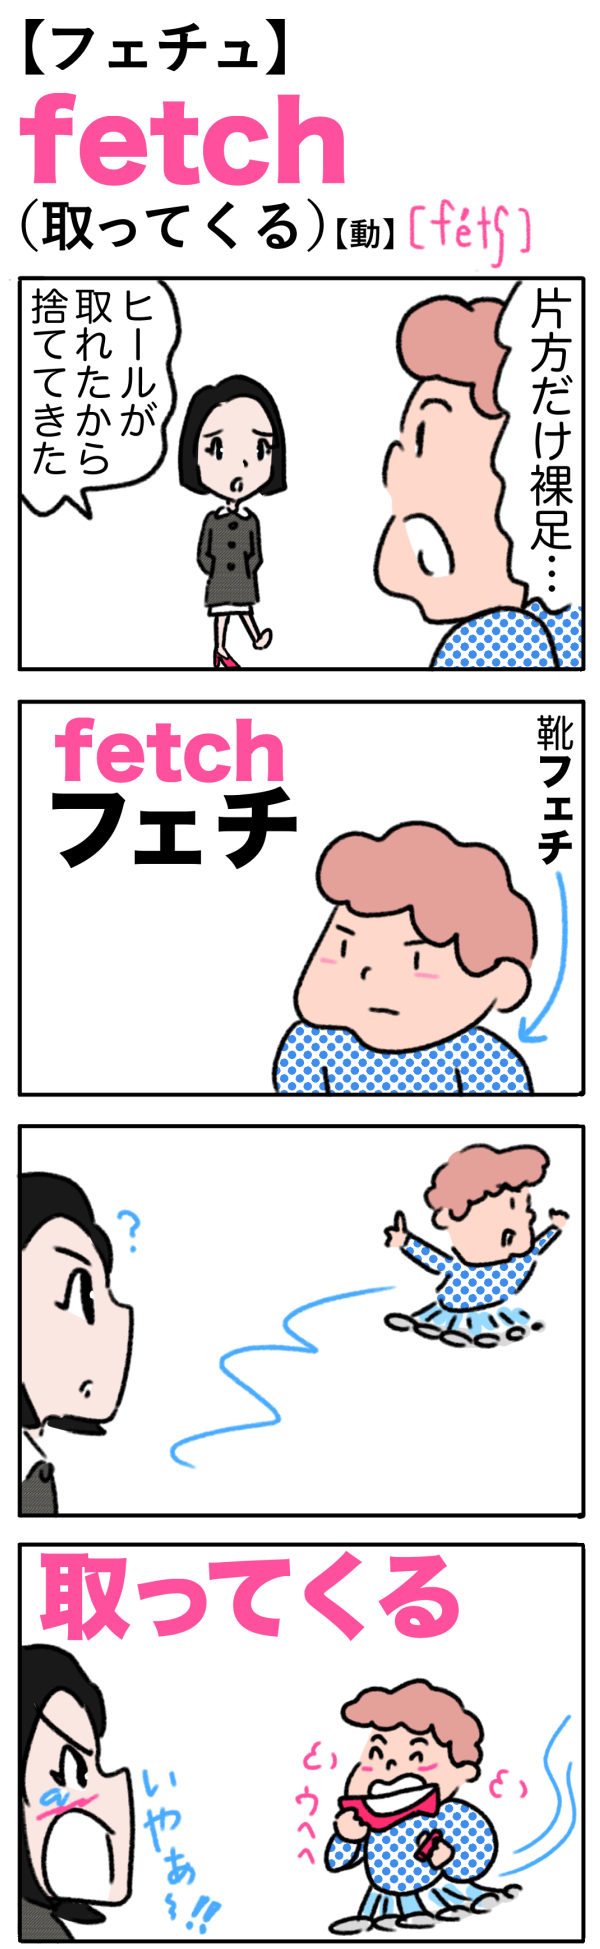 fetch（取ってくる）の語呂合わせ英単語